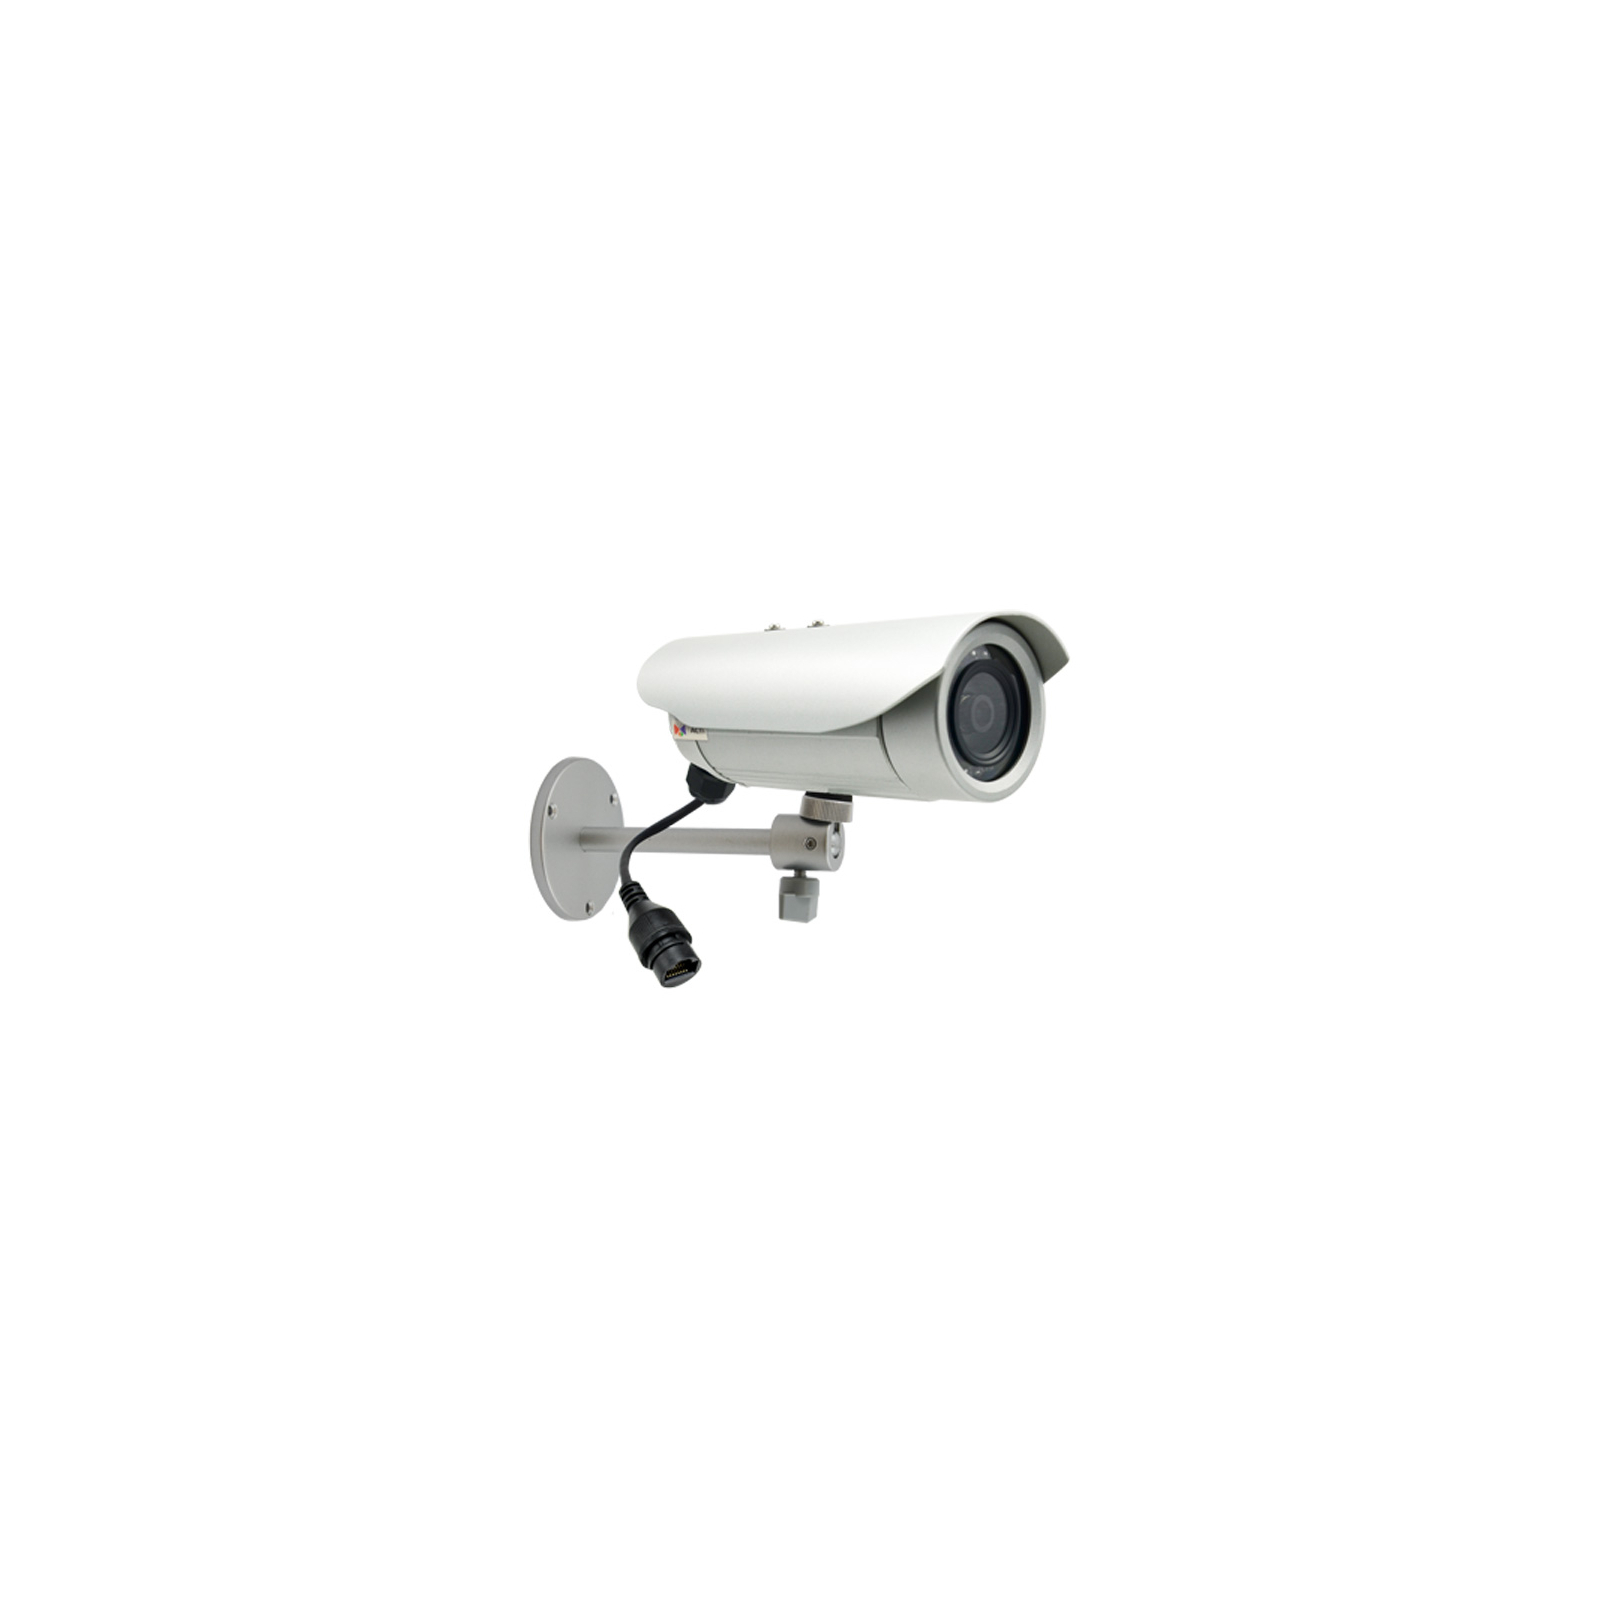 Камера видеонаблюдения ACTi E33A